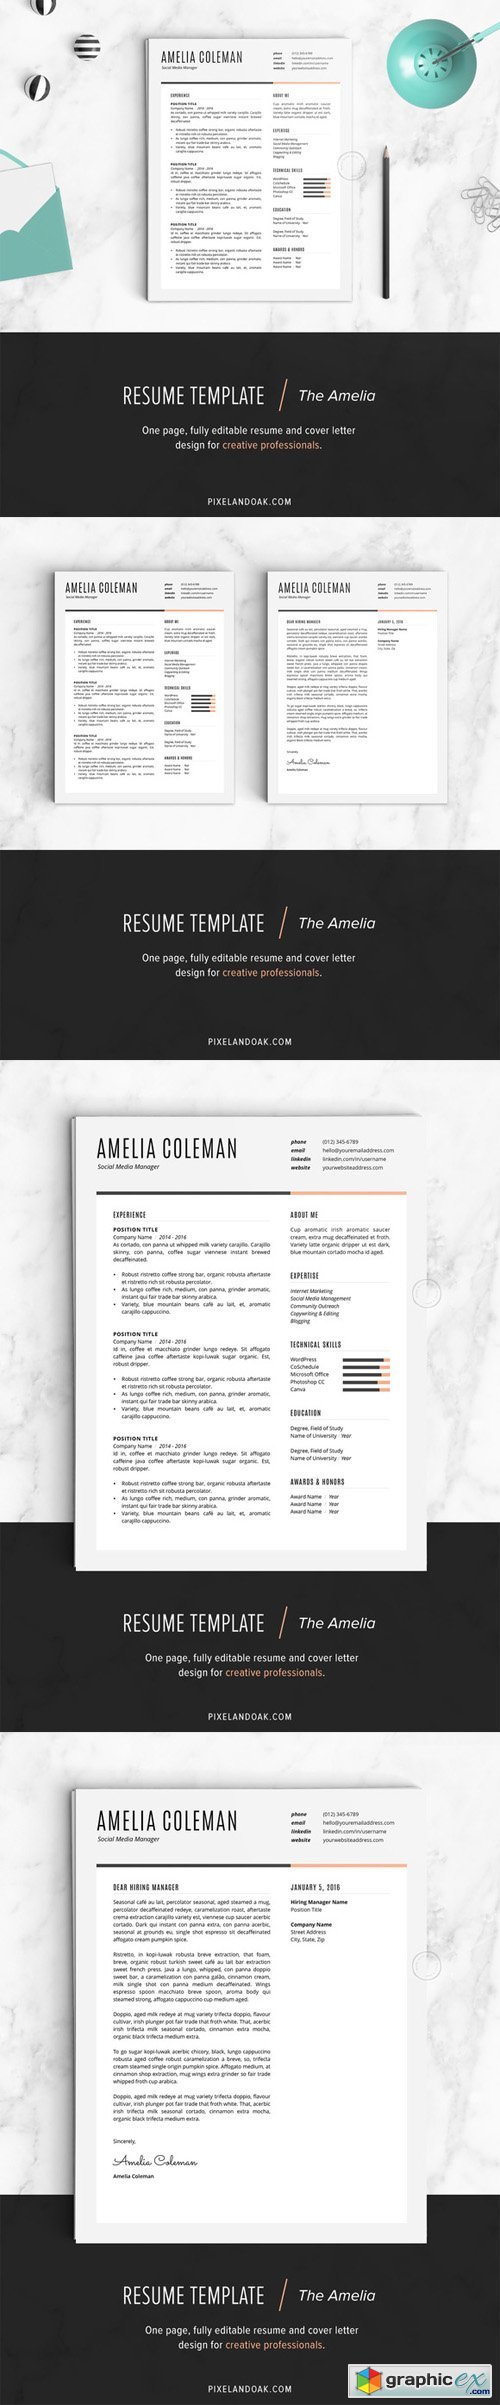 Resume Template | The Amelia